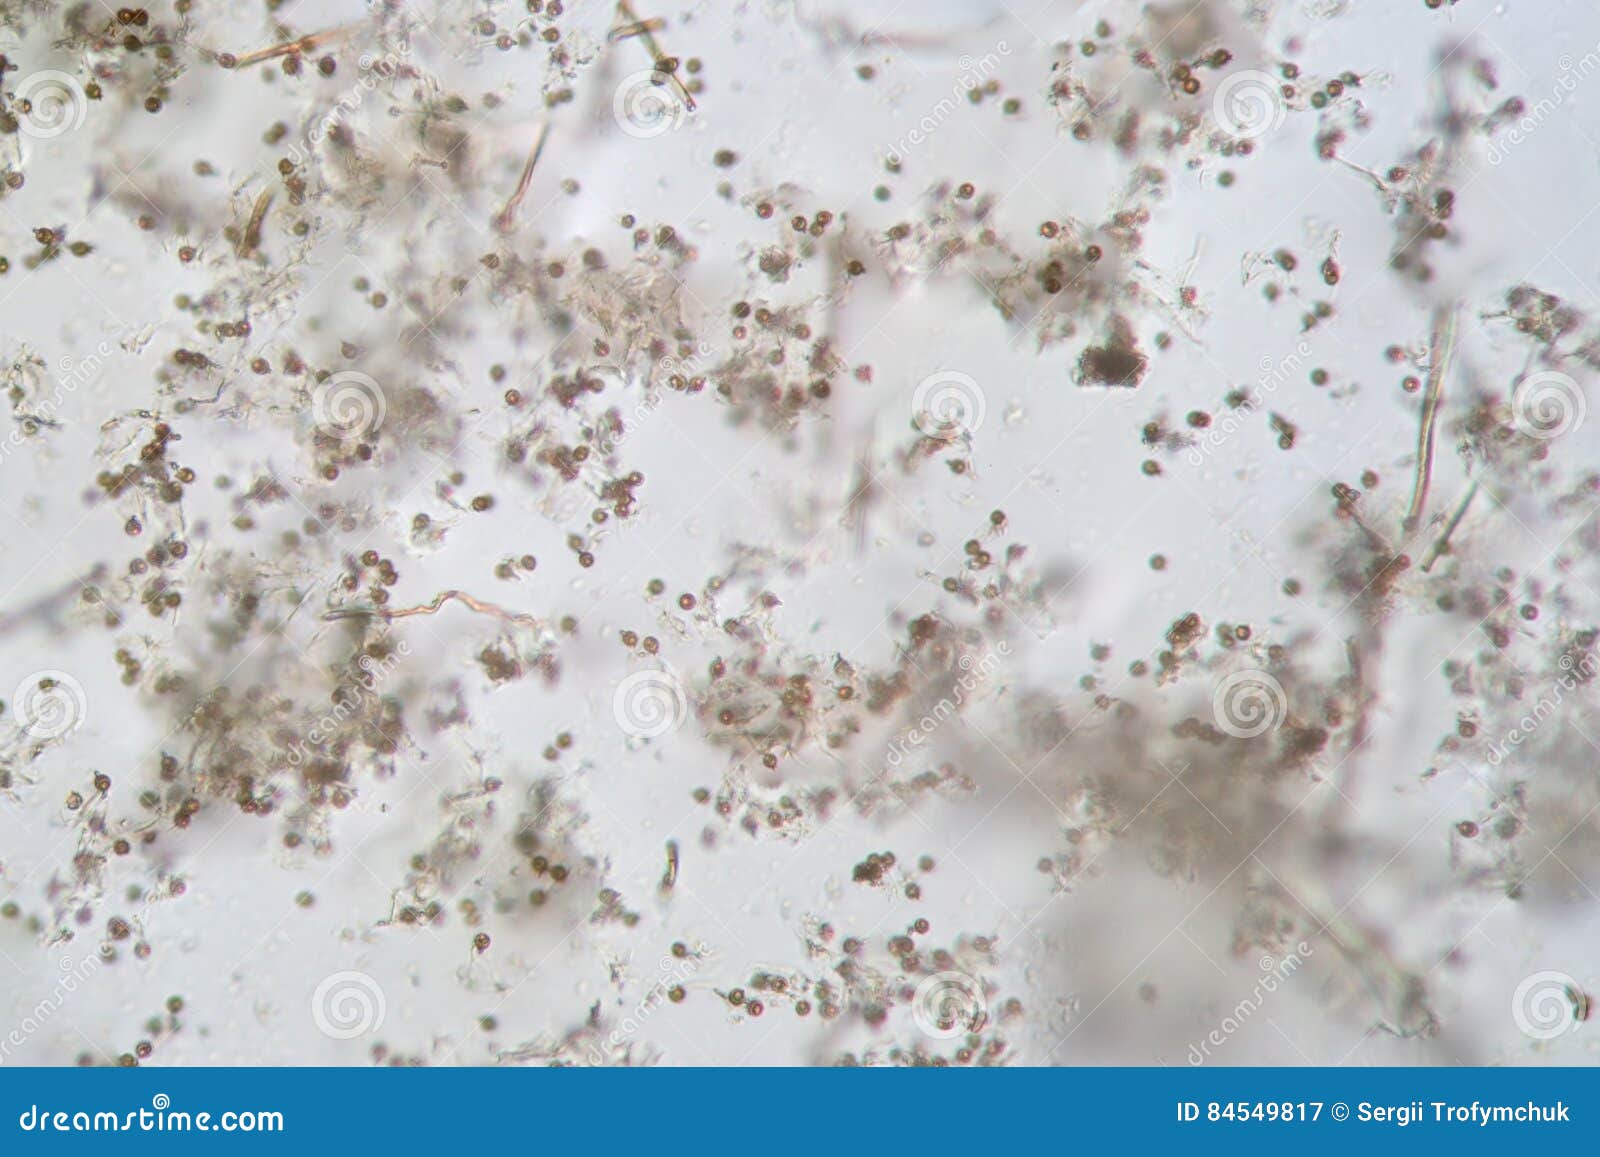 microscopic volatile spores of puffball fungus. lycoperdon, basidiomycota is a genus of puffball mushrooms